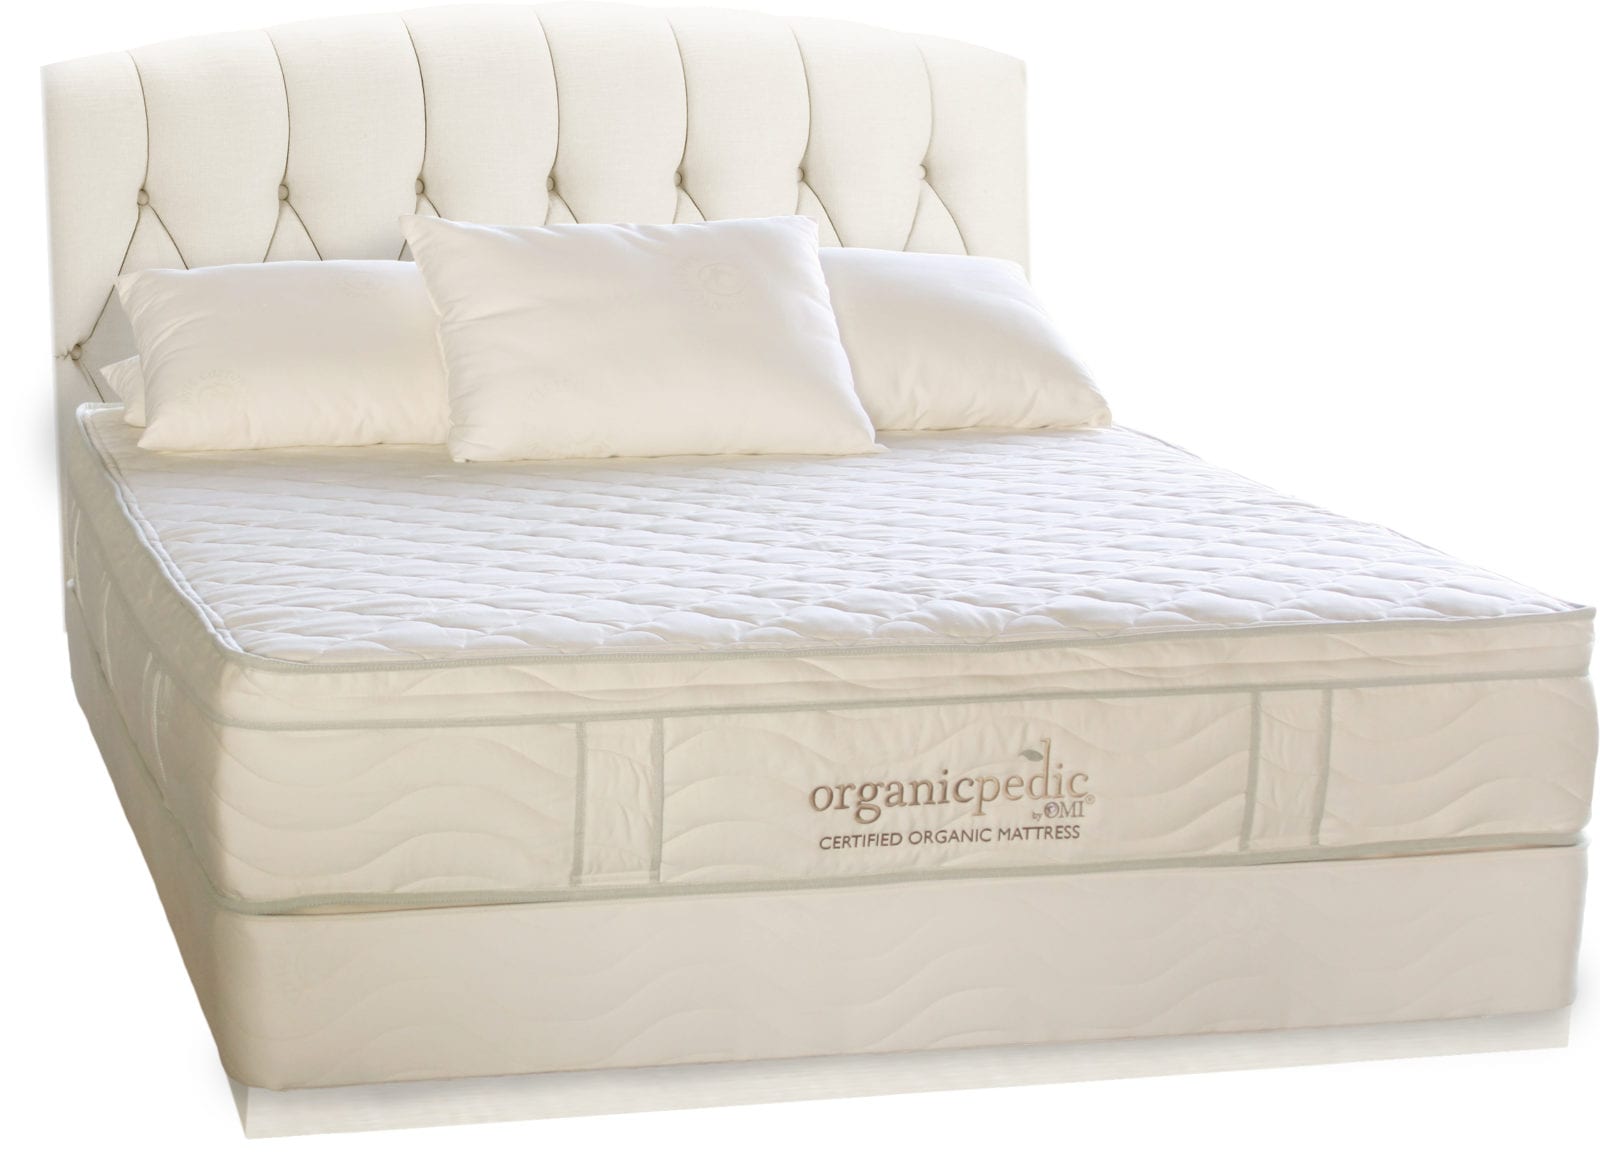 organicpedic duo mattress reviews